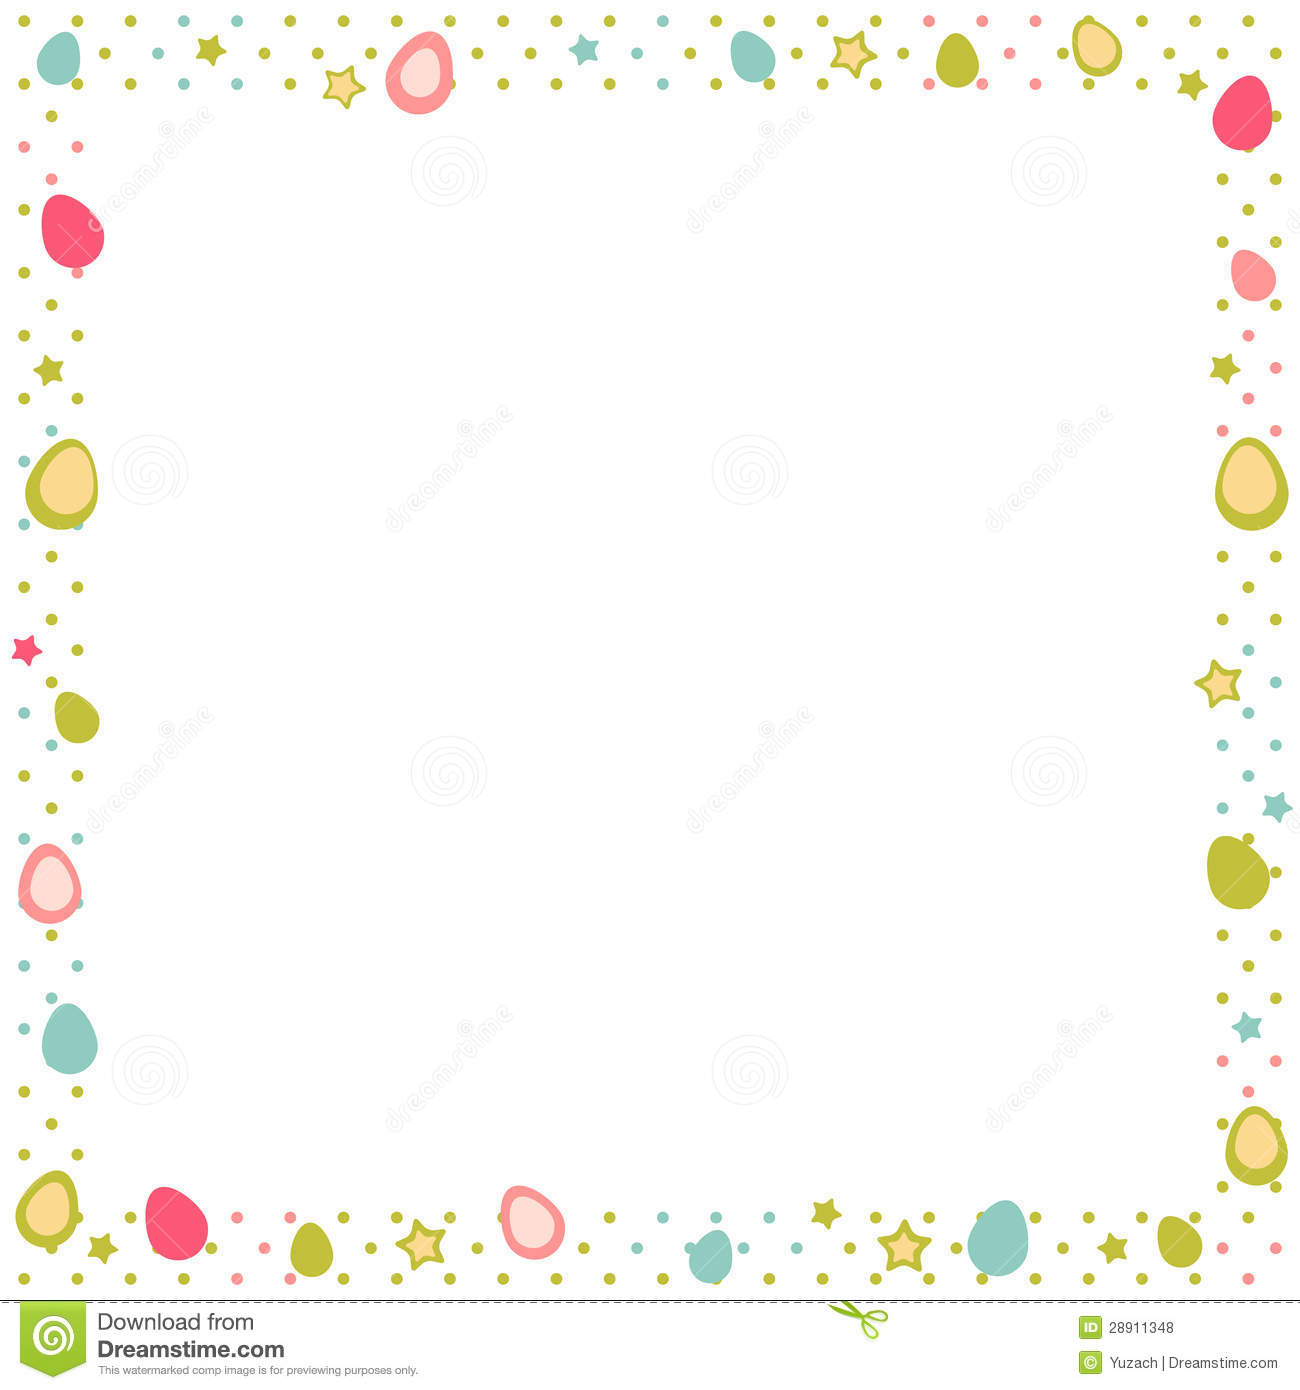 Easter Eggs Colorful Frame Polka Dot Royalty Free Stock Photos   Image